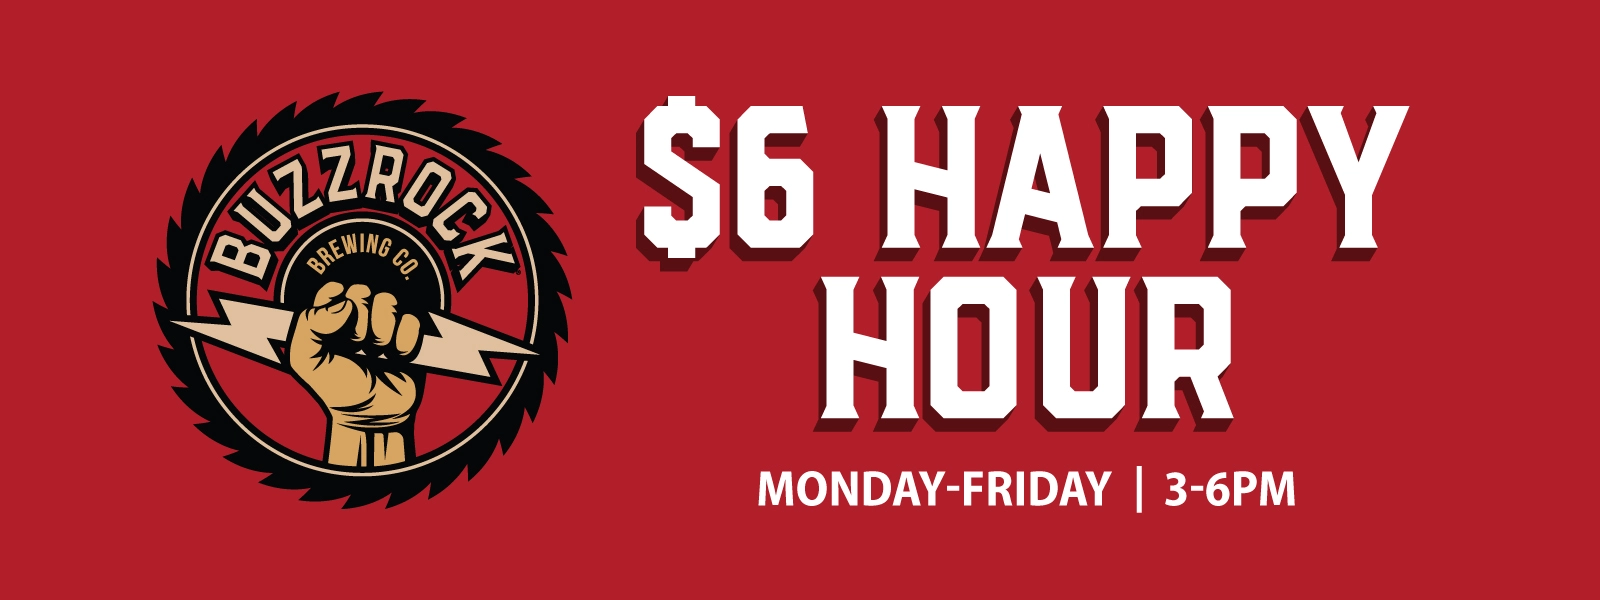 Brews Hall Torrance $6 Happy Hour Menu. Monday through Friday 3 pm to 6pm